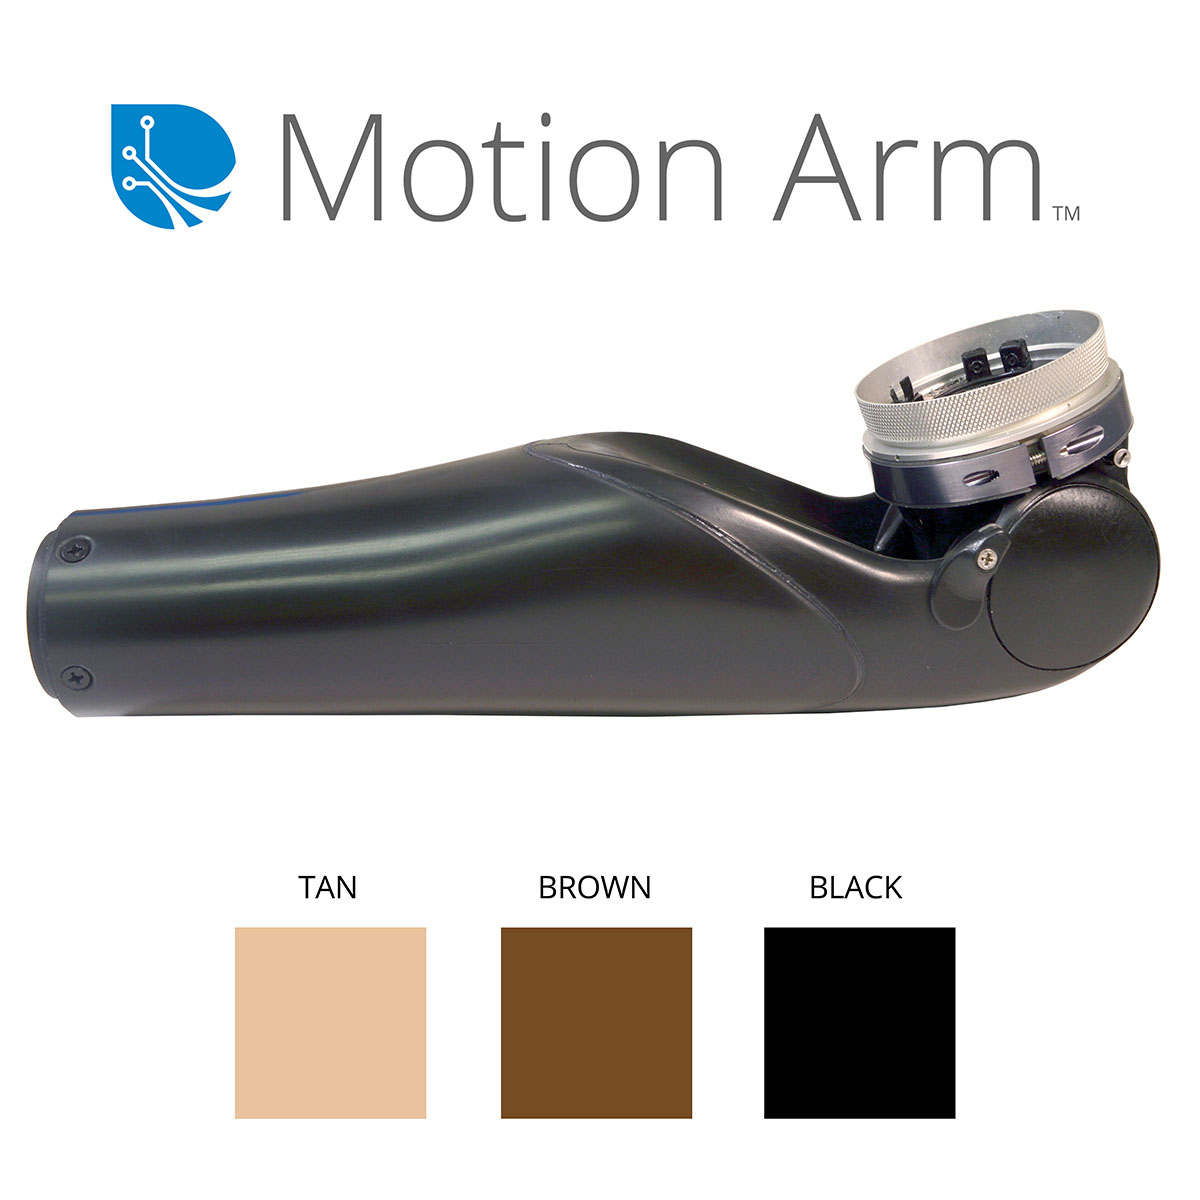 Motion Arm